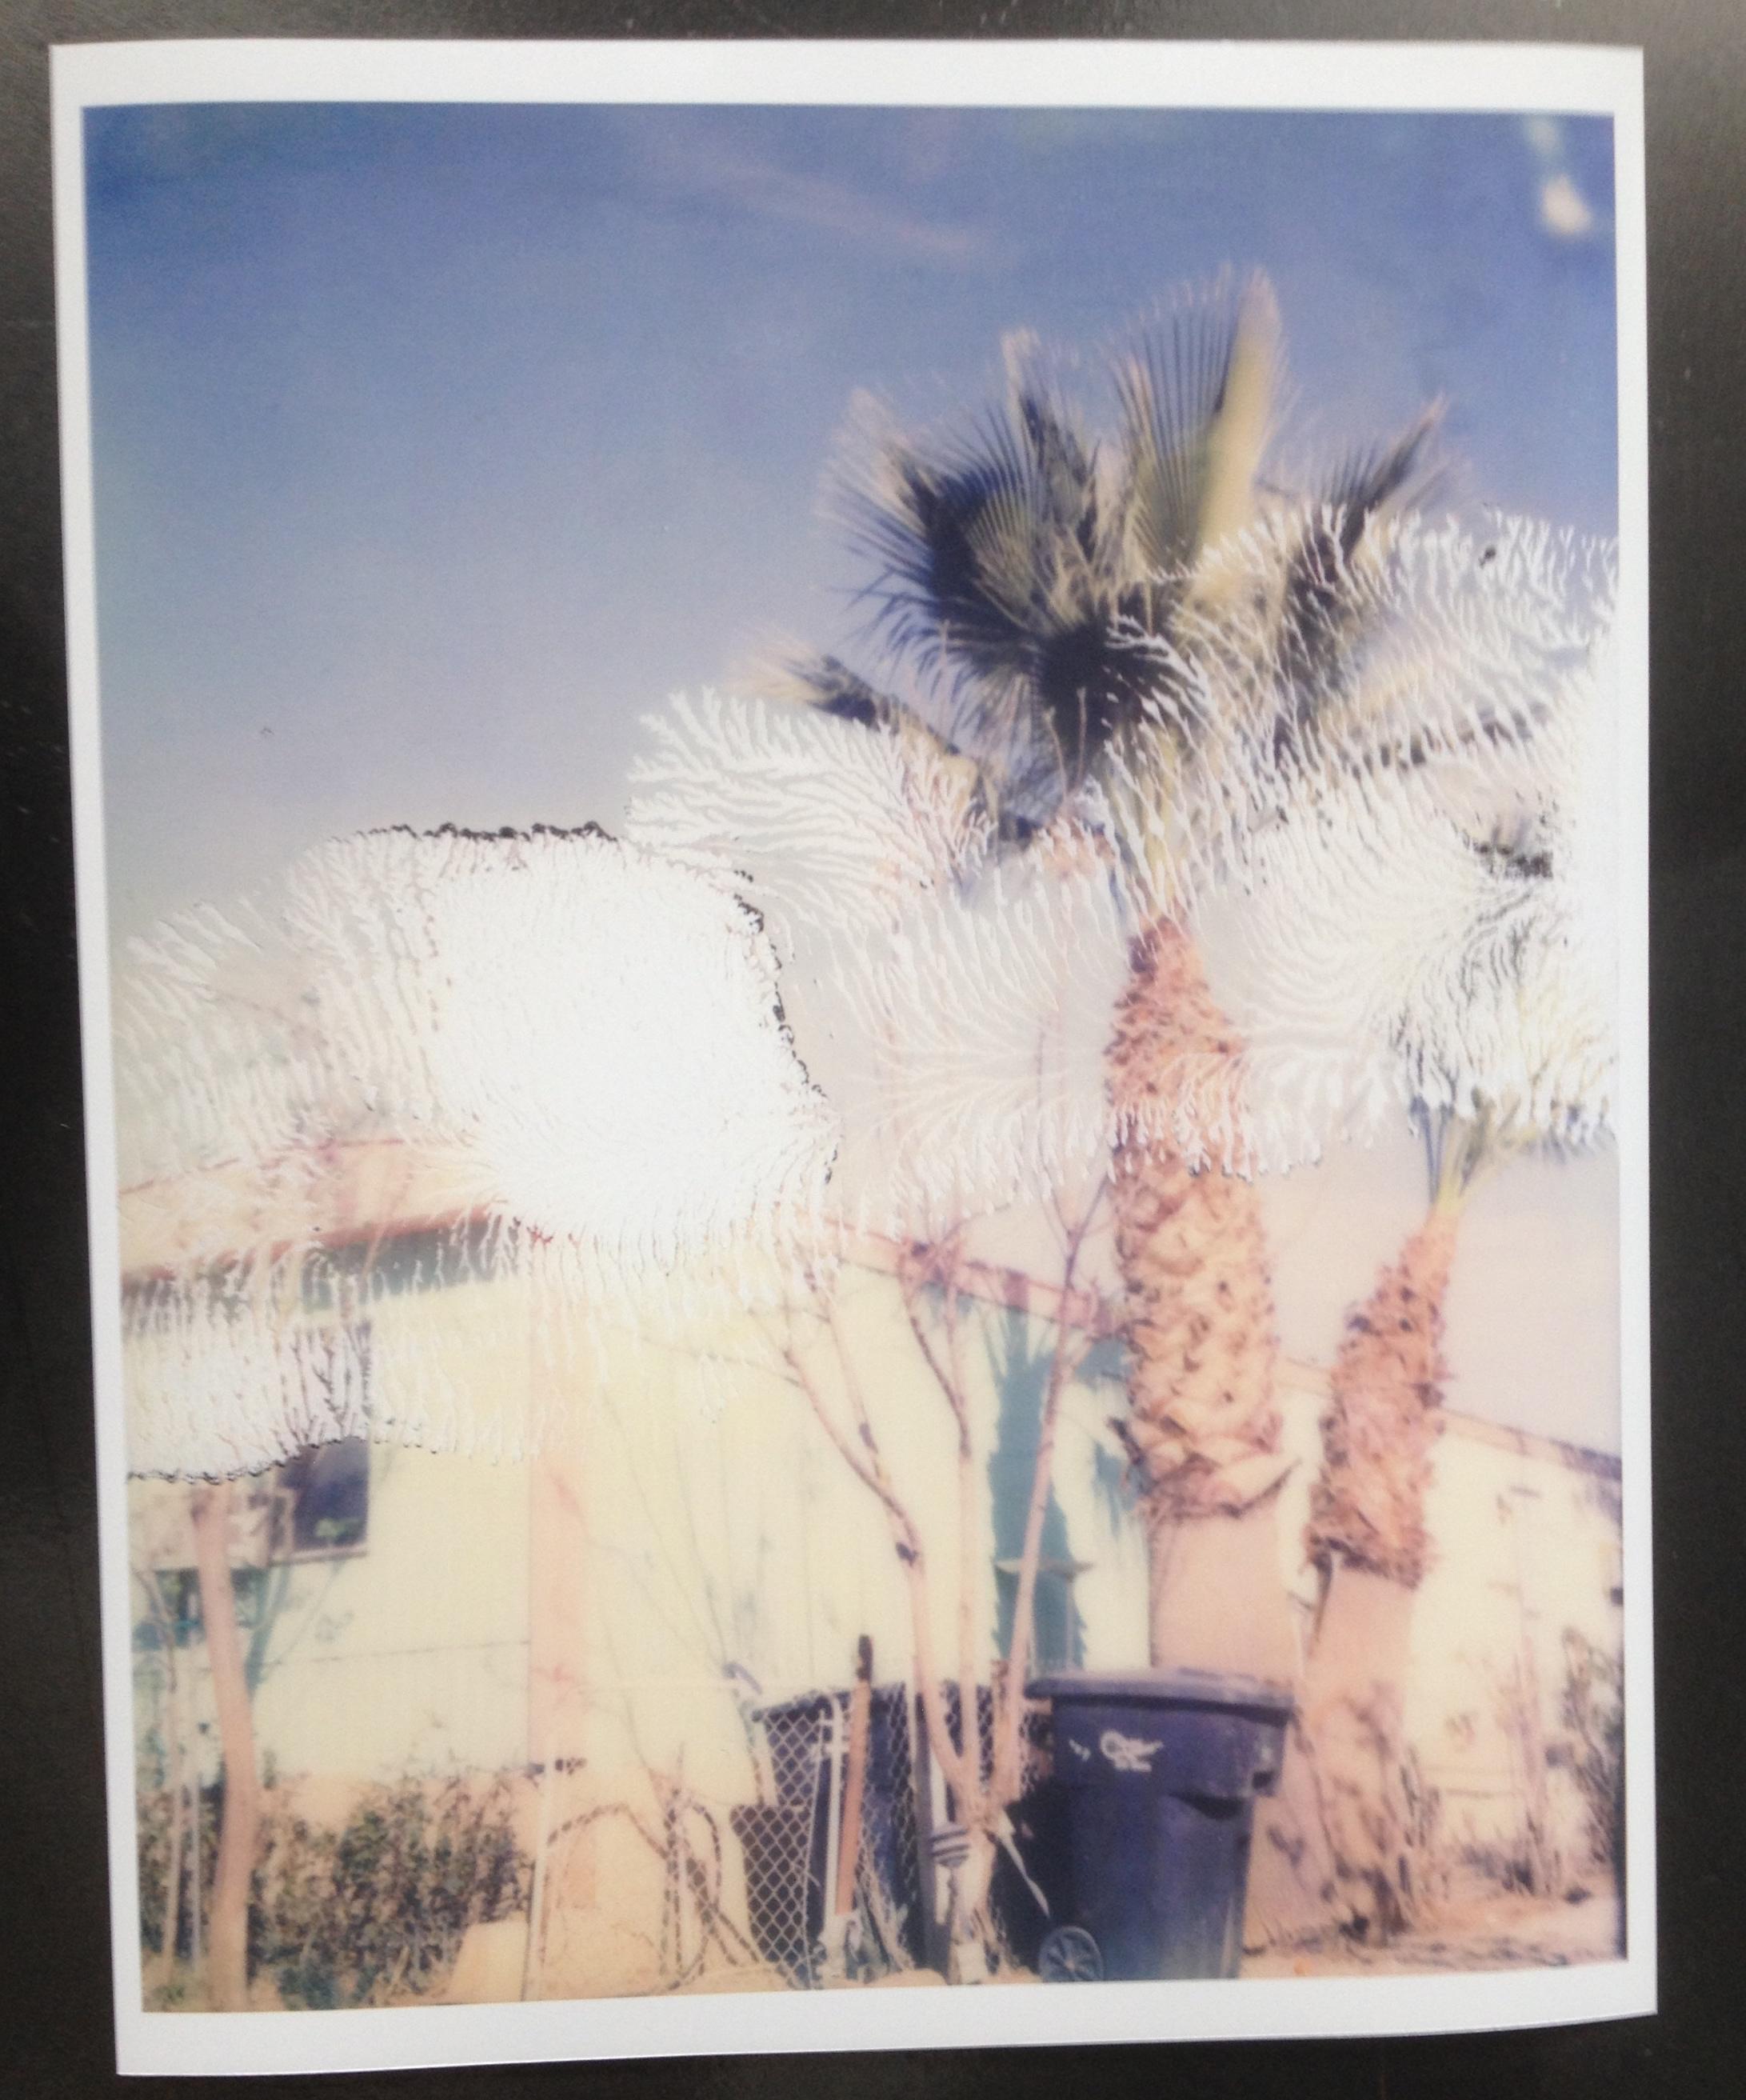 Borrego Springs (California Badlands) - Polaroid, 21st Century, Contemporary - Photograph by Stefanie Schneider